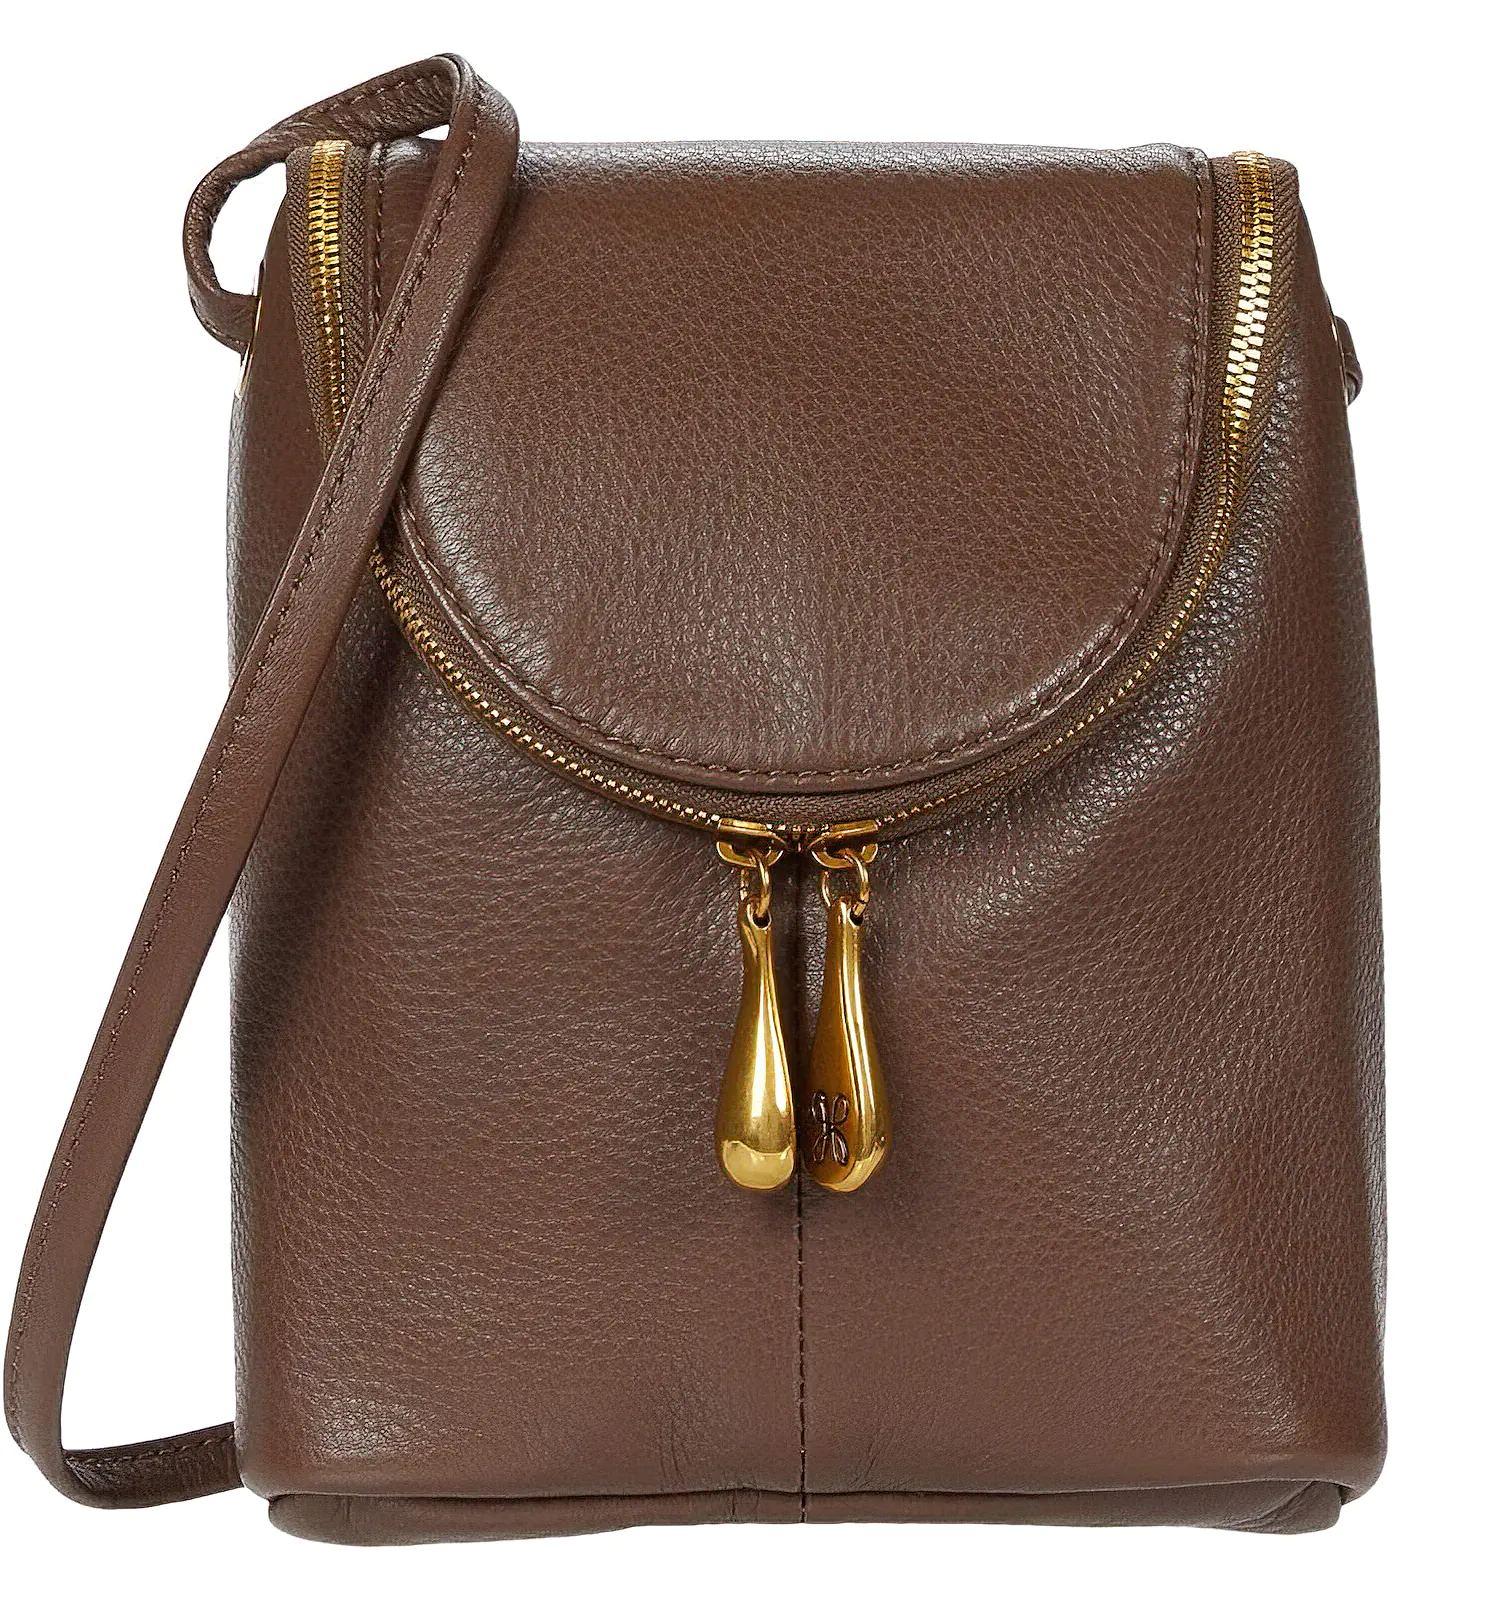 HOBO Fern Smooth Leather Handbag